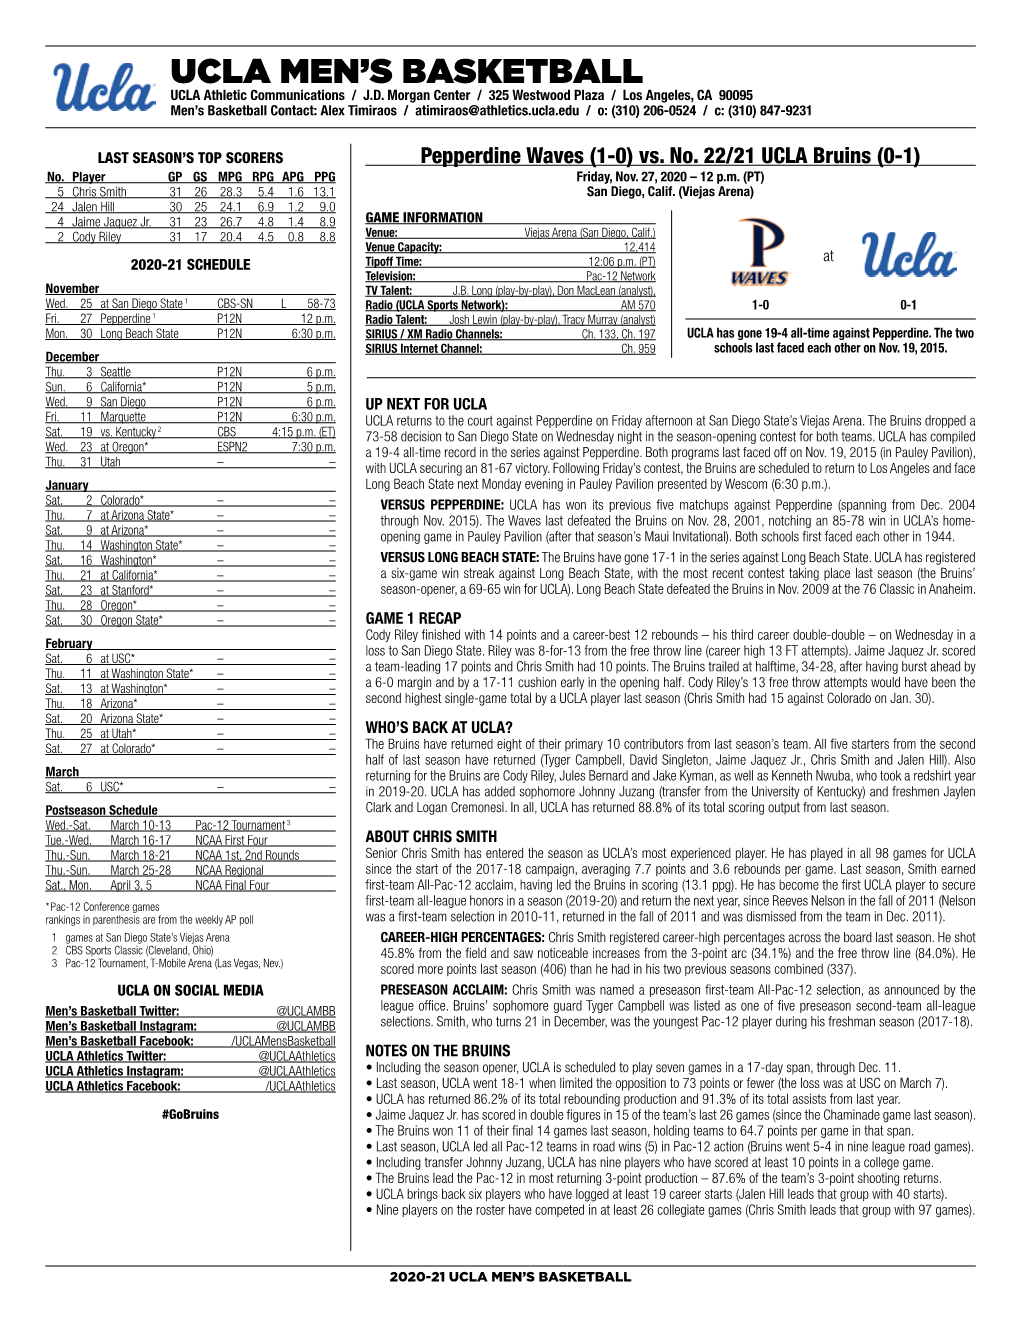 UCLA Men's Basketball Page 1/1 UCLA’S SEASON/Careerseason/Career Statistics STATS As of Nov 26, 2020 2020-21All Games ROSTER